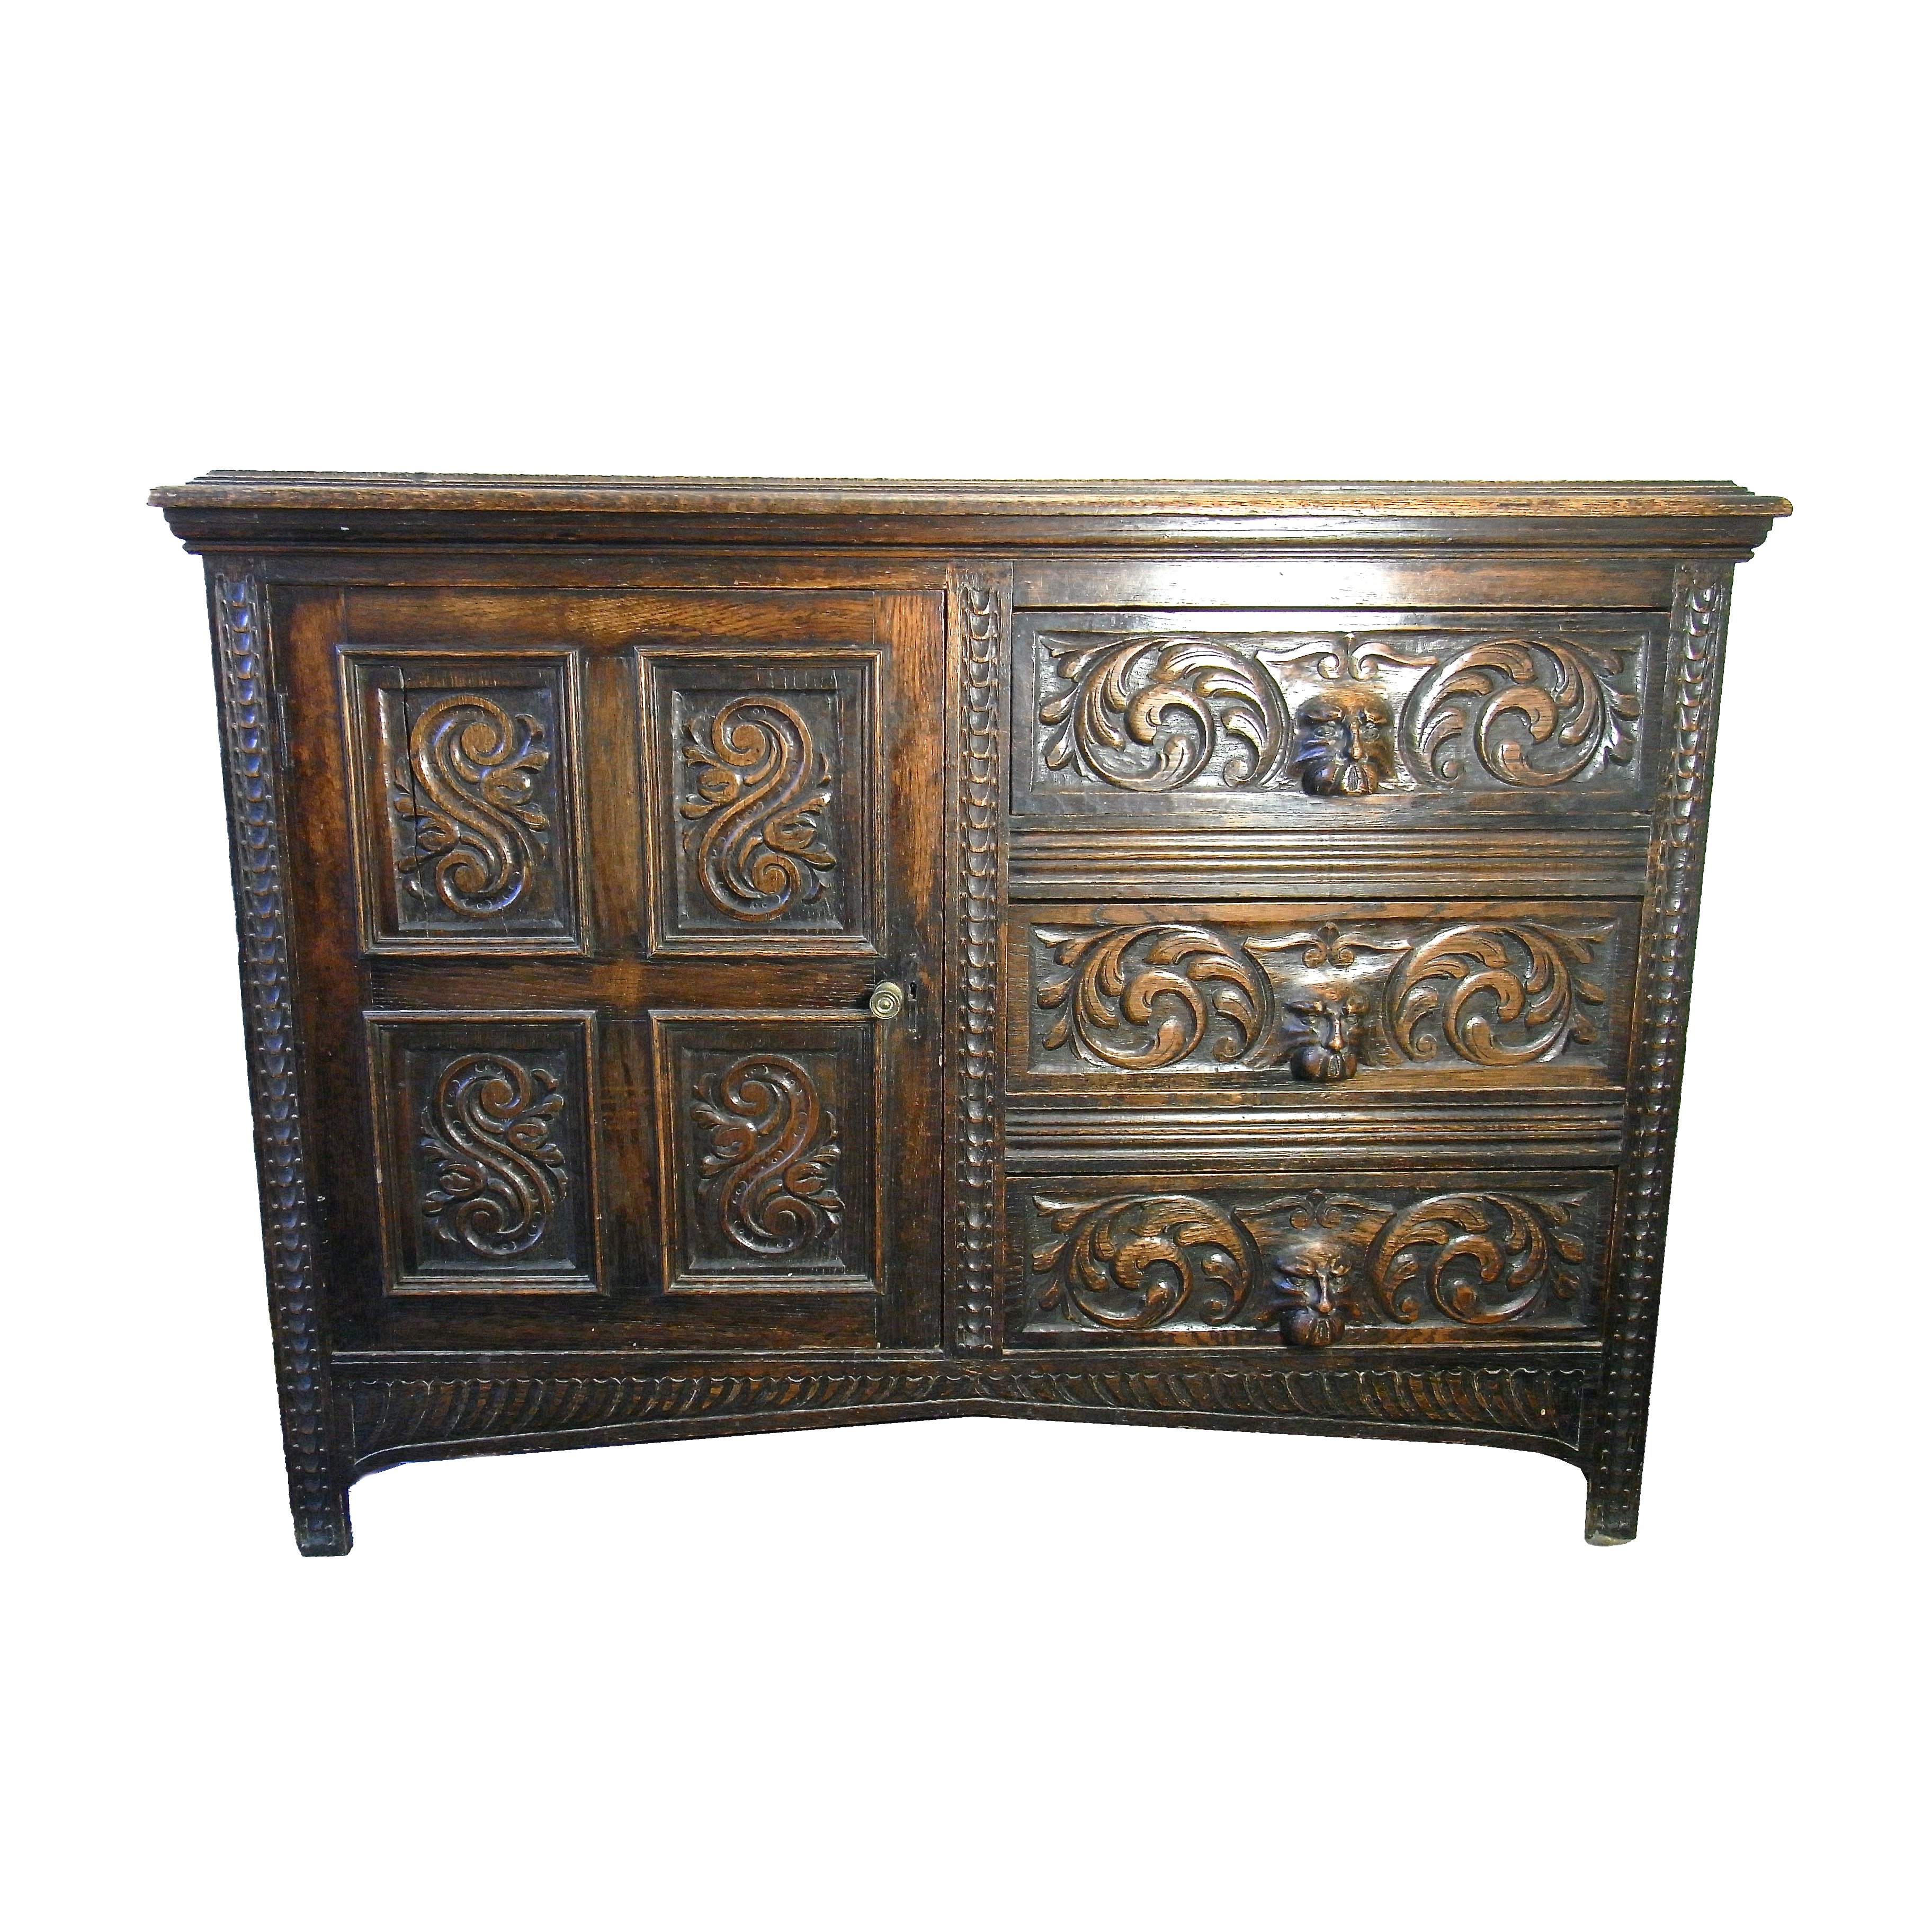 A Victorian carved oak side cupboard